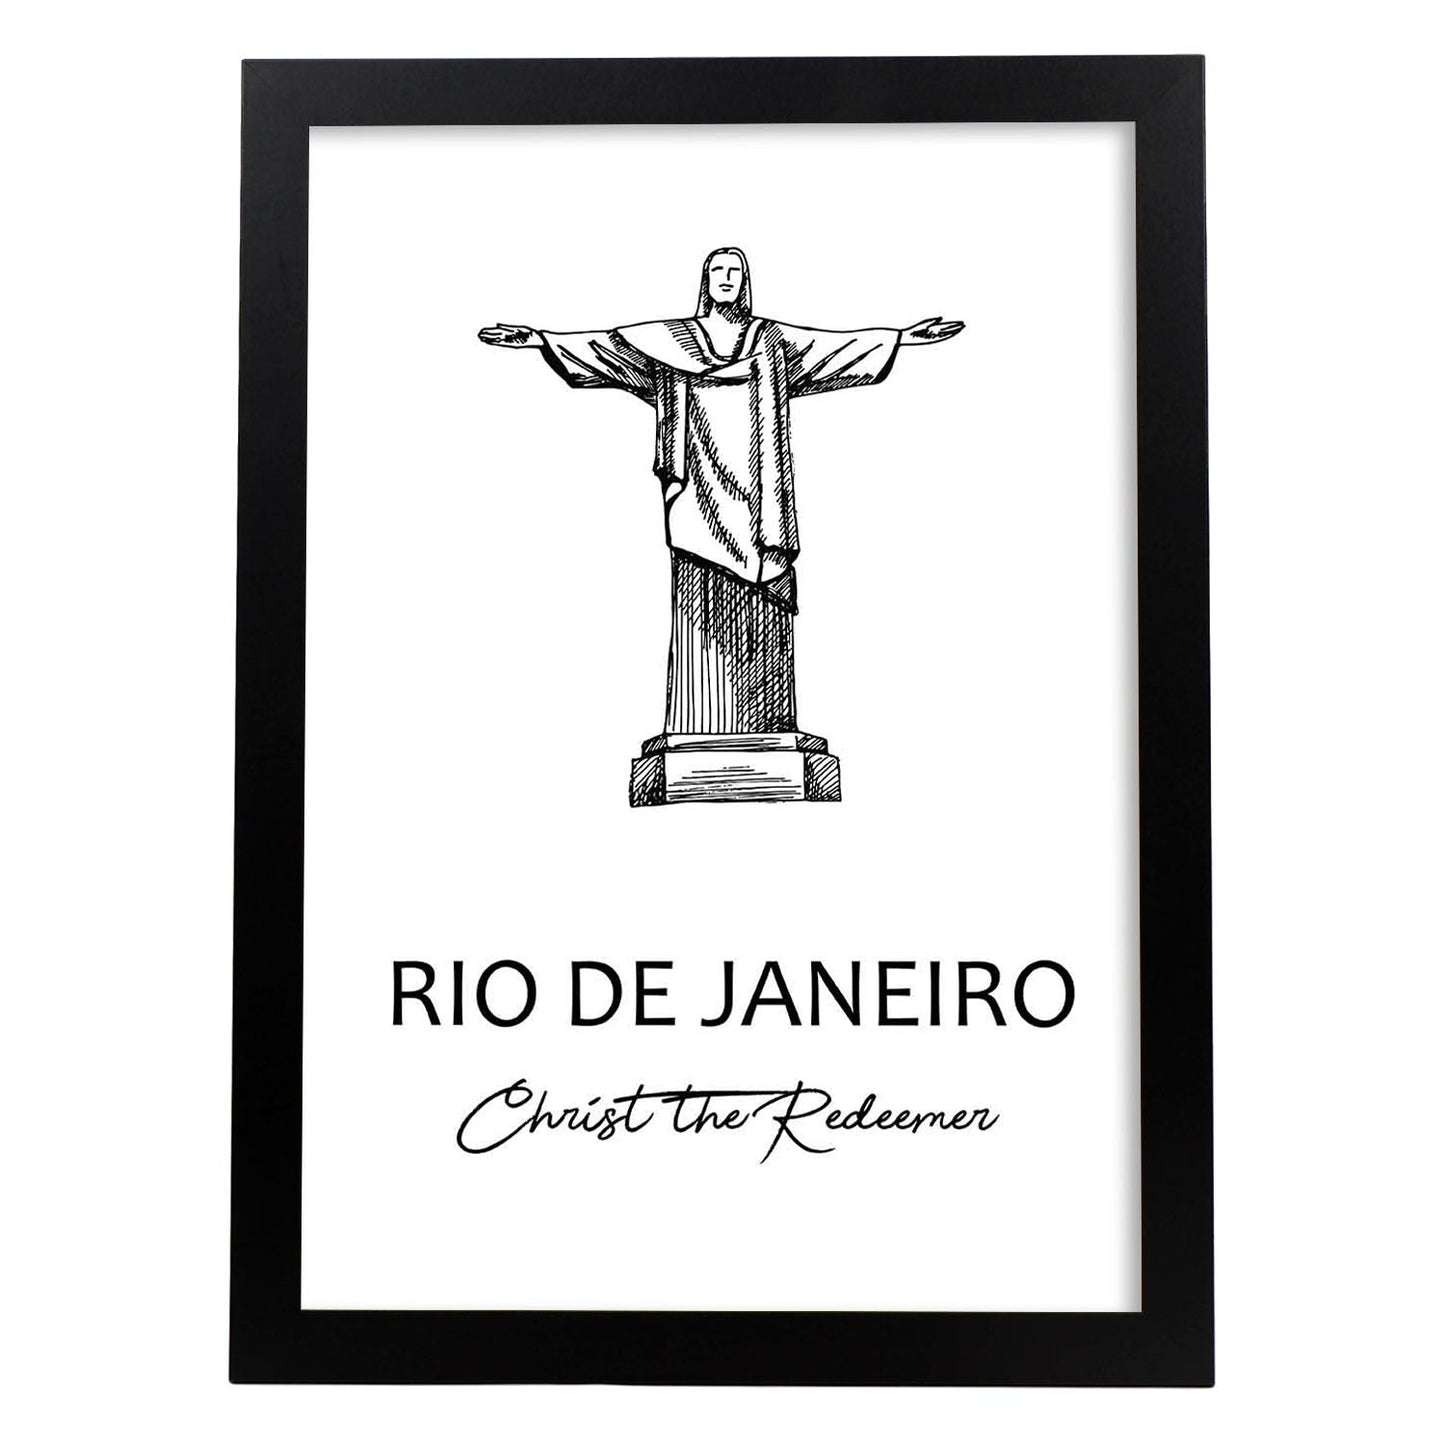 Poster de Rio de Janeiro - Cristo redentor. Láminas con monumentos de ciudades.-Artwork-Nacnic-A3-Marco Negro-Nacnic Estudio SL